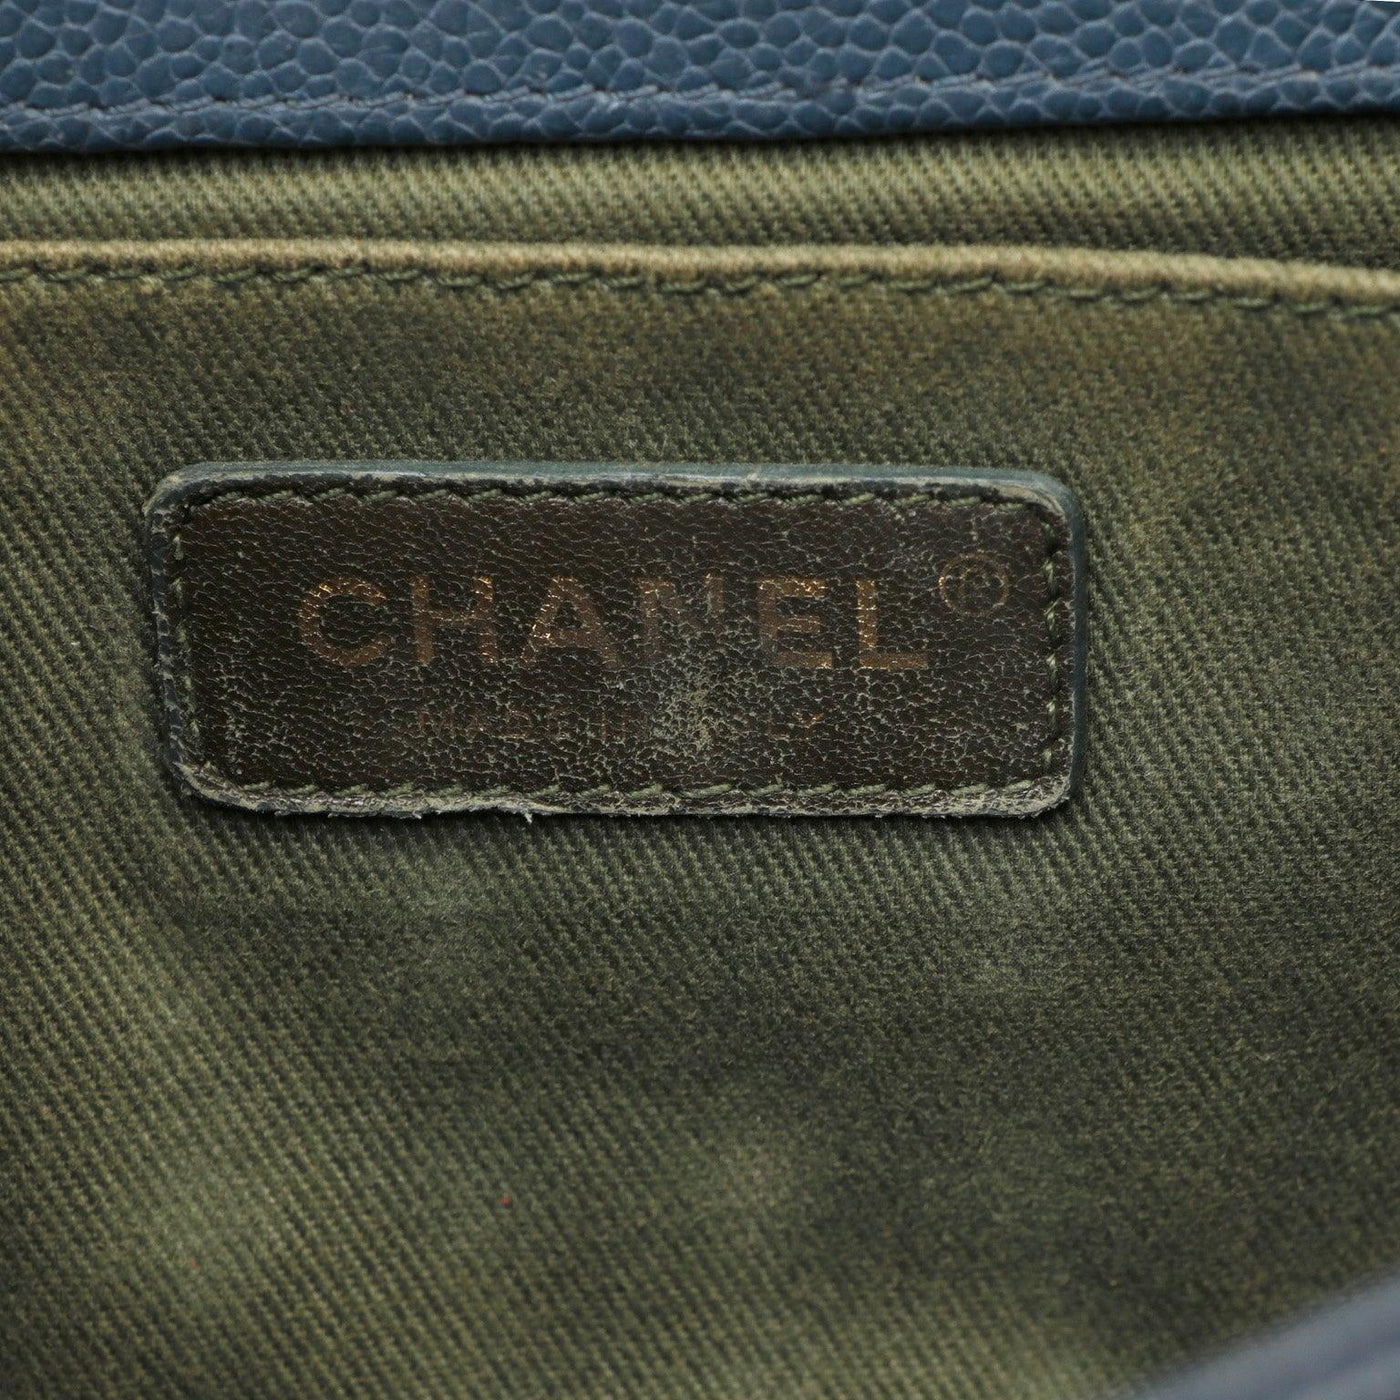 Chanel Navy Blue Caviar Medium Boy Bag - Only Authentics